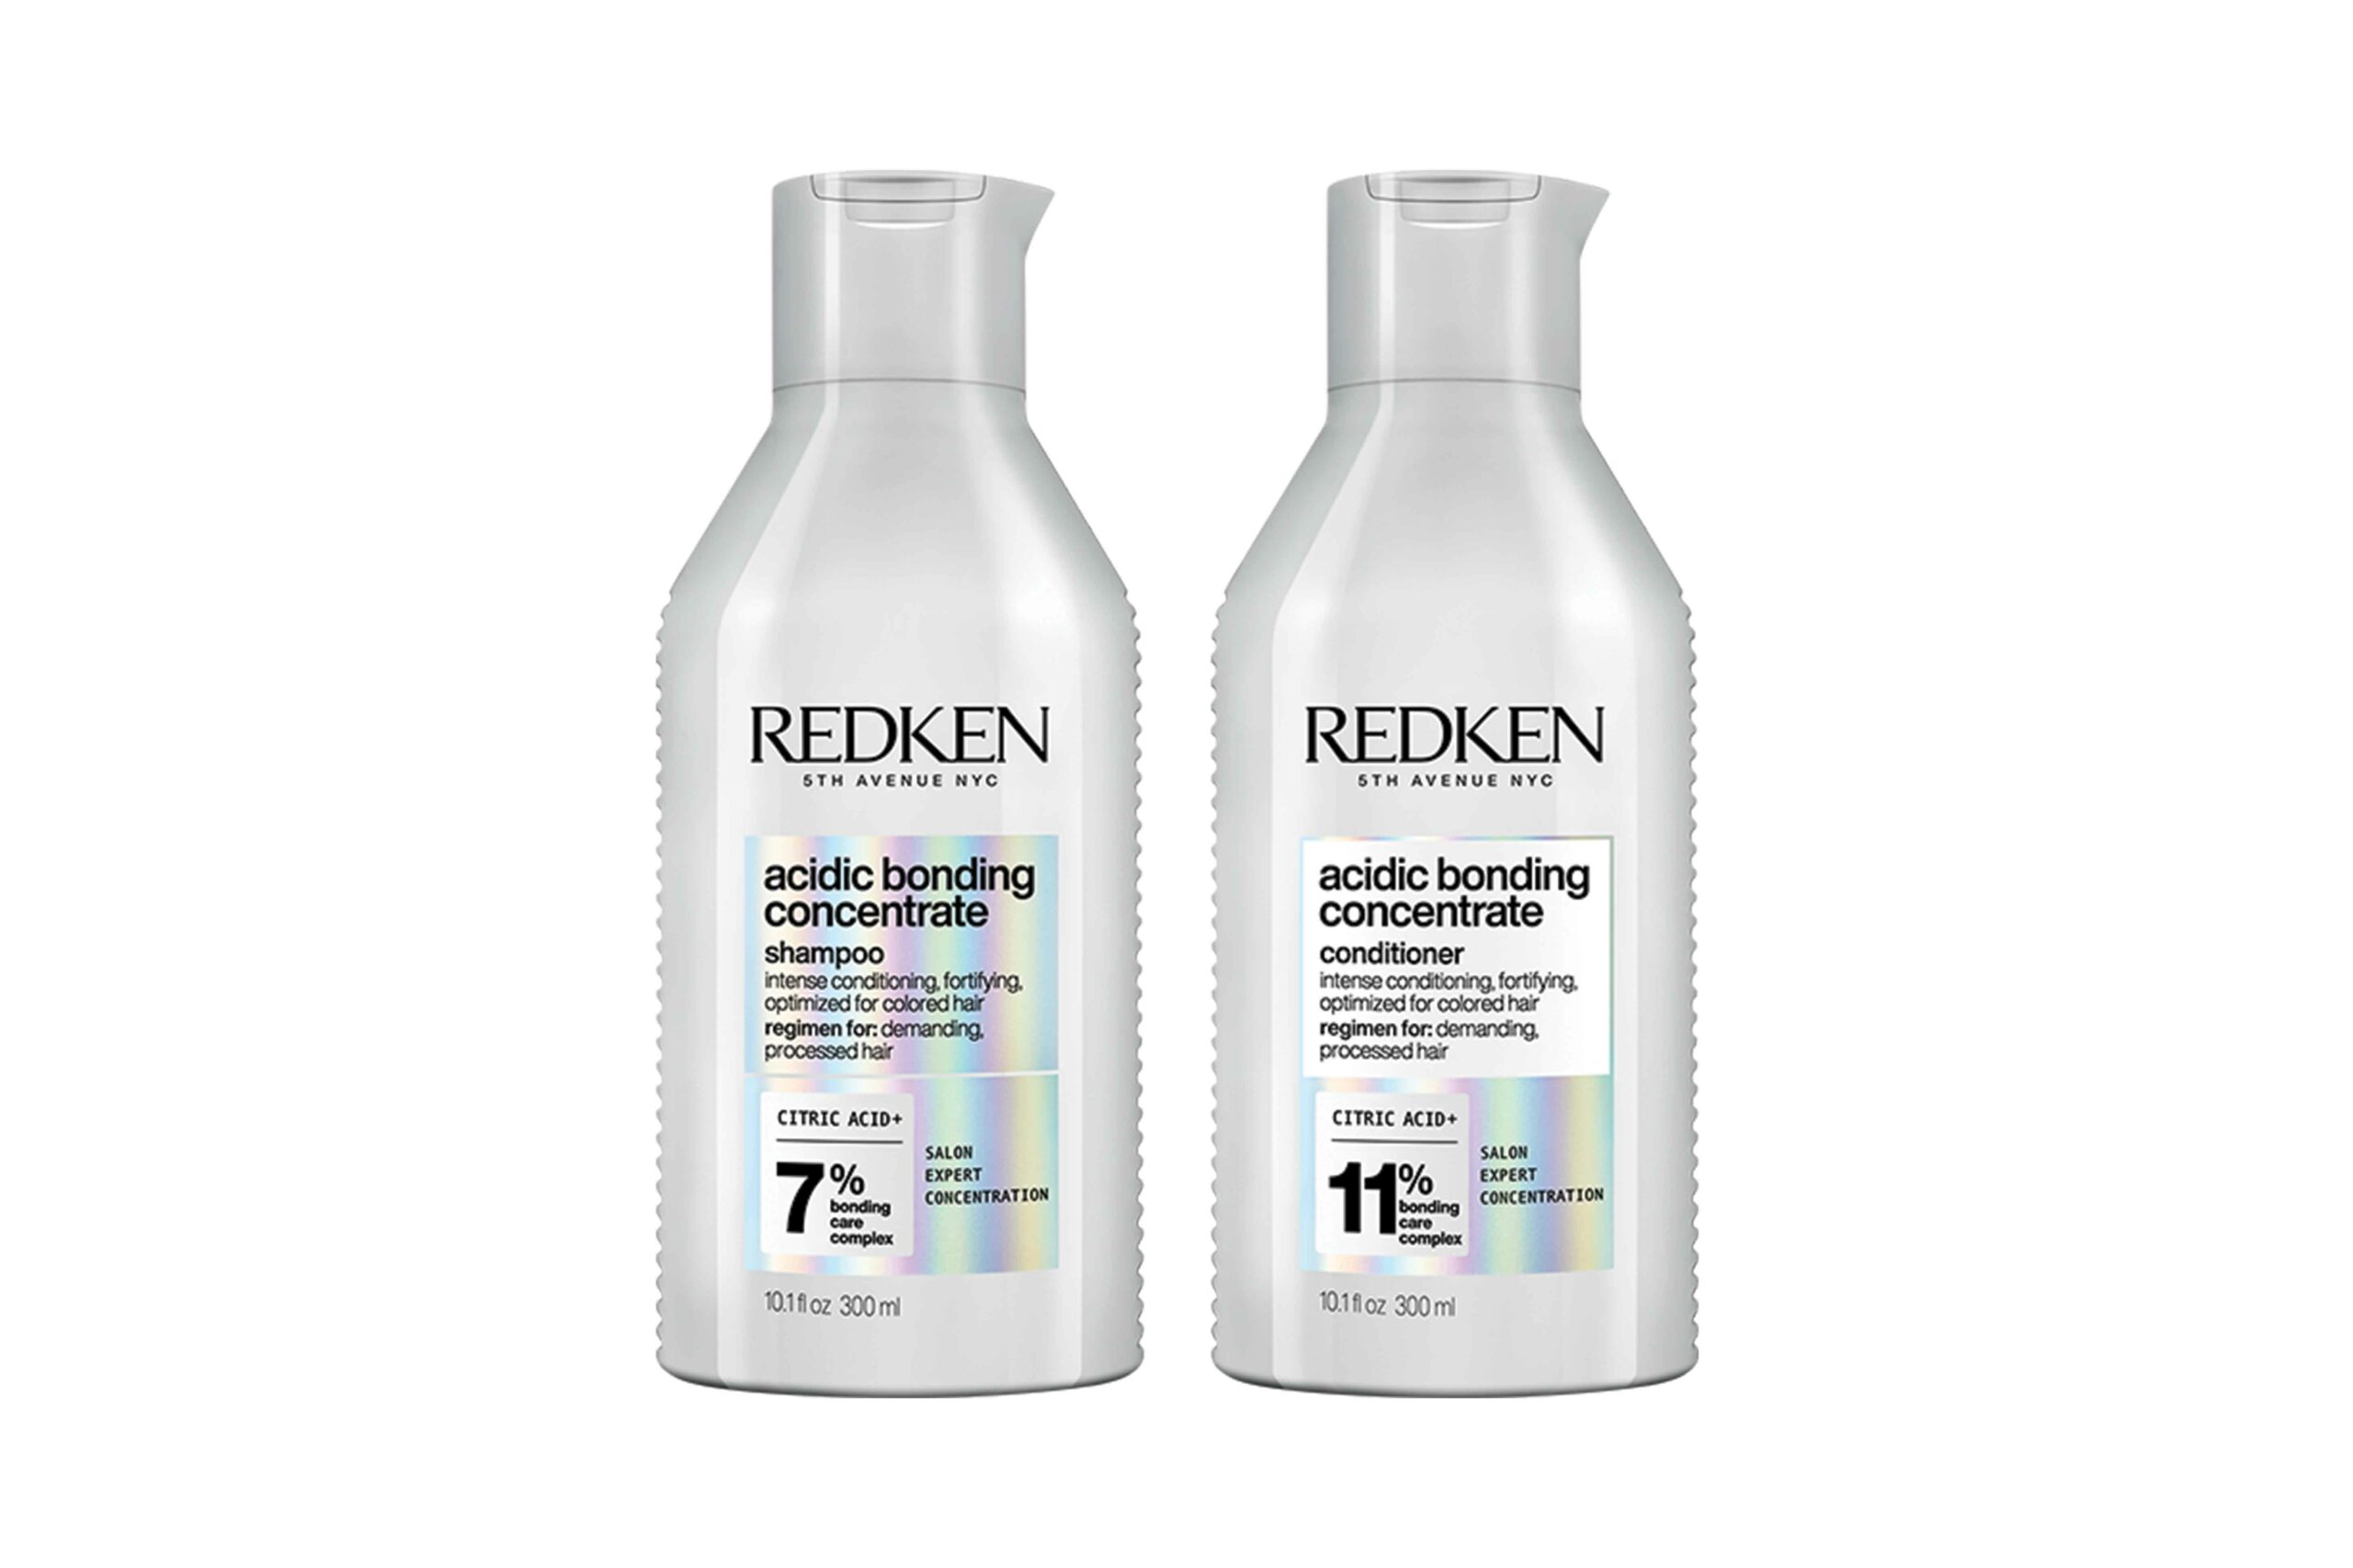 Redken launches Acidic Bonding Concentrate Intensive Treatment